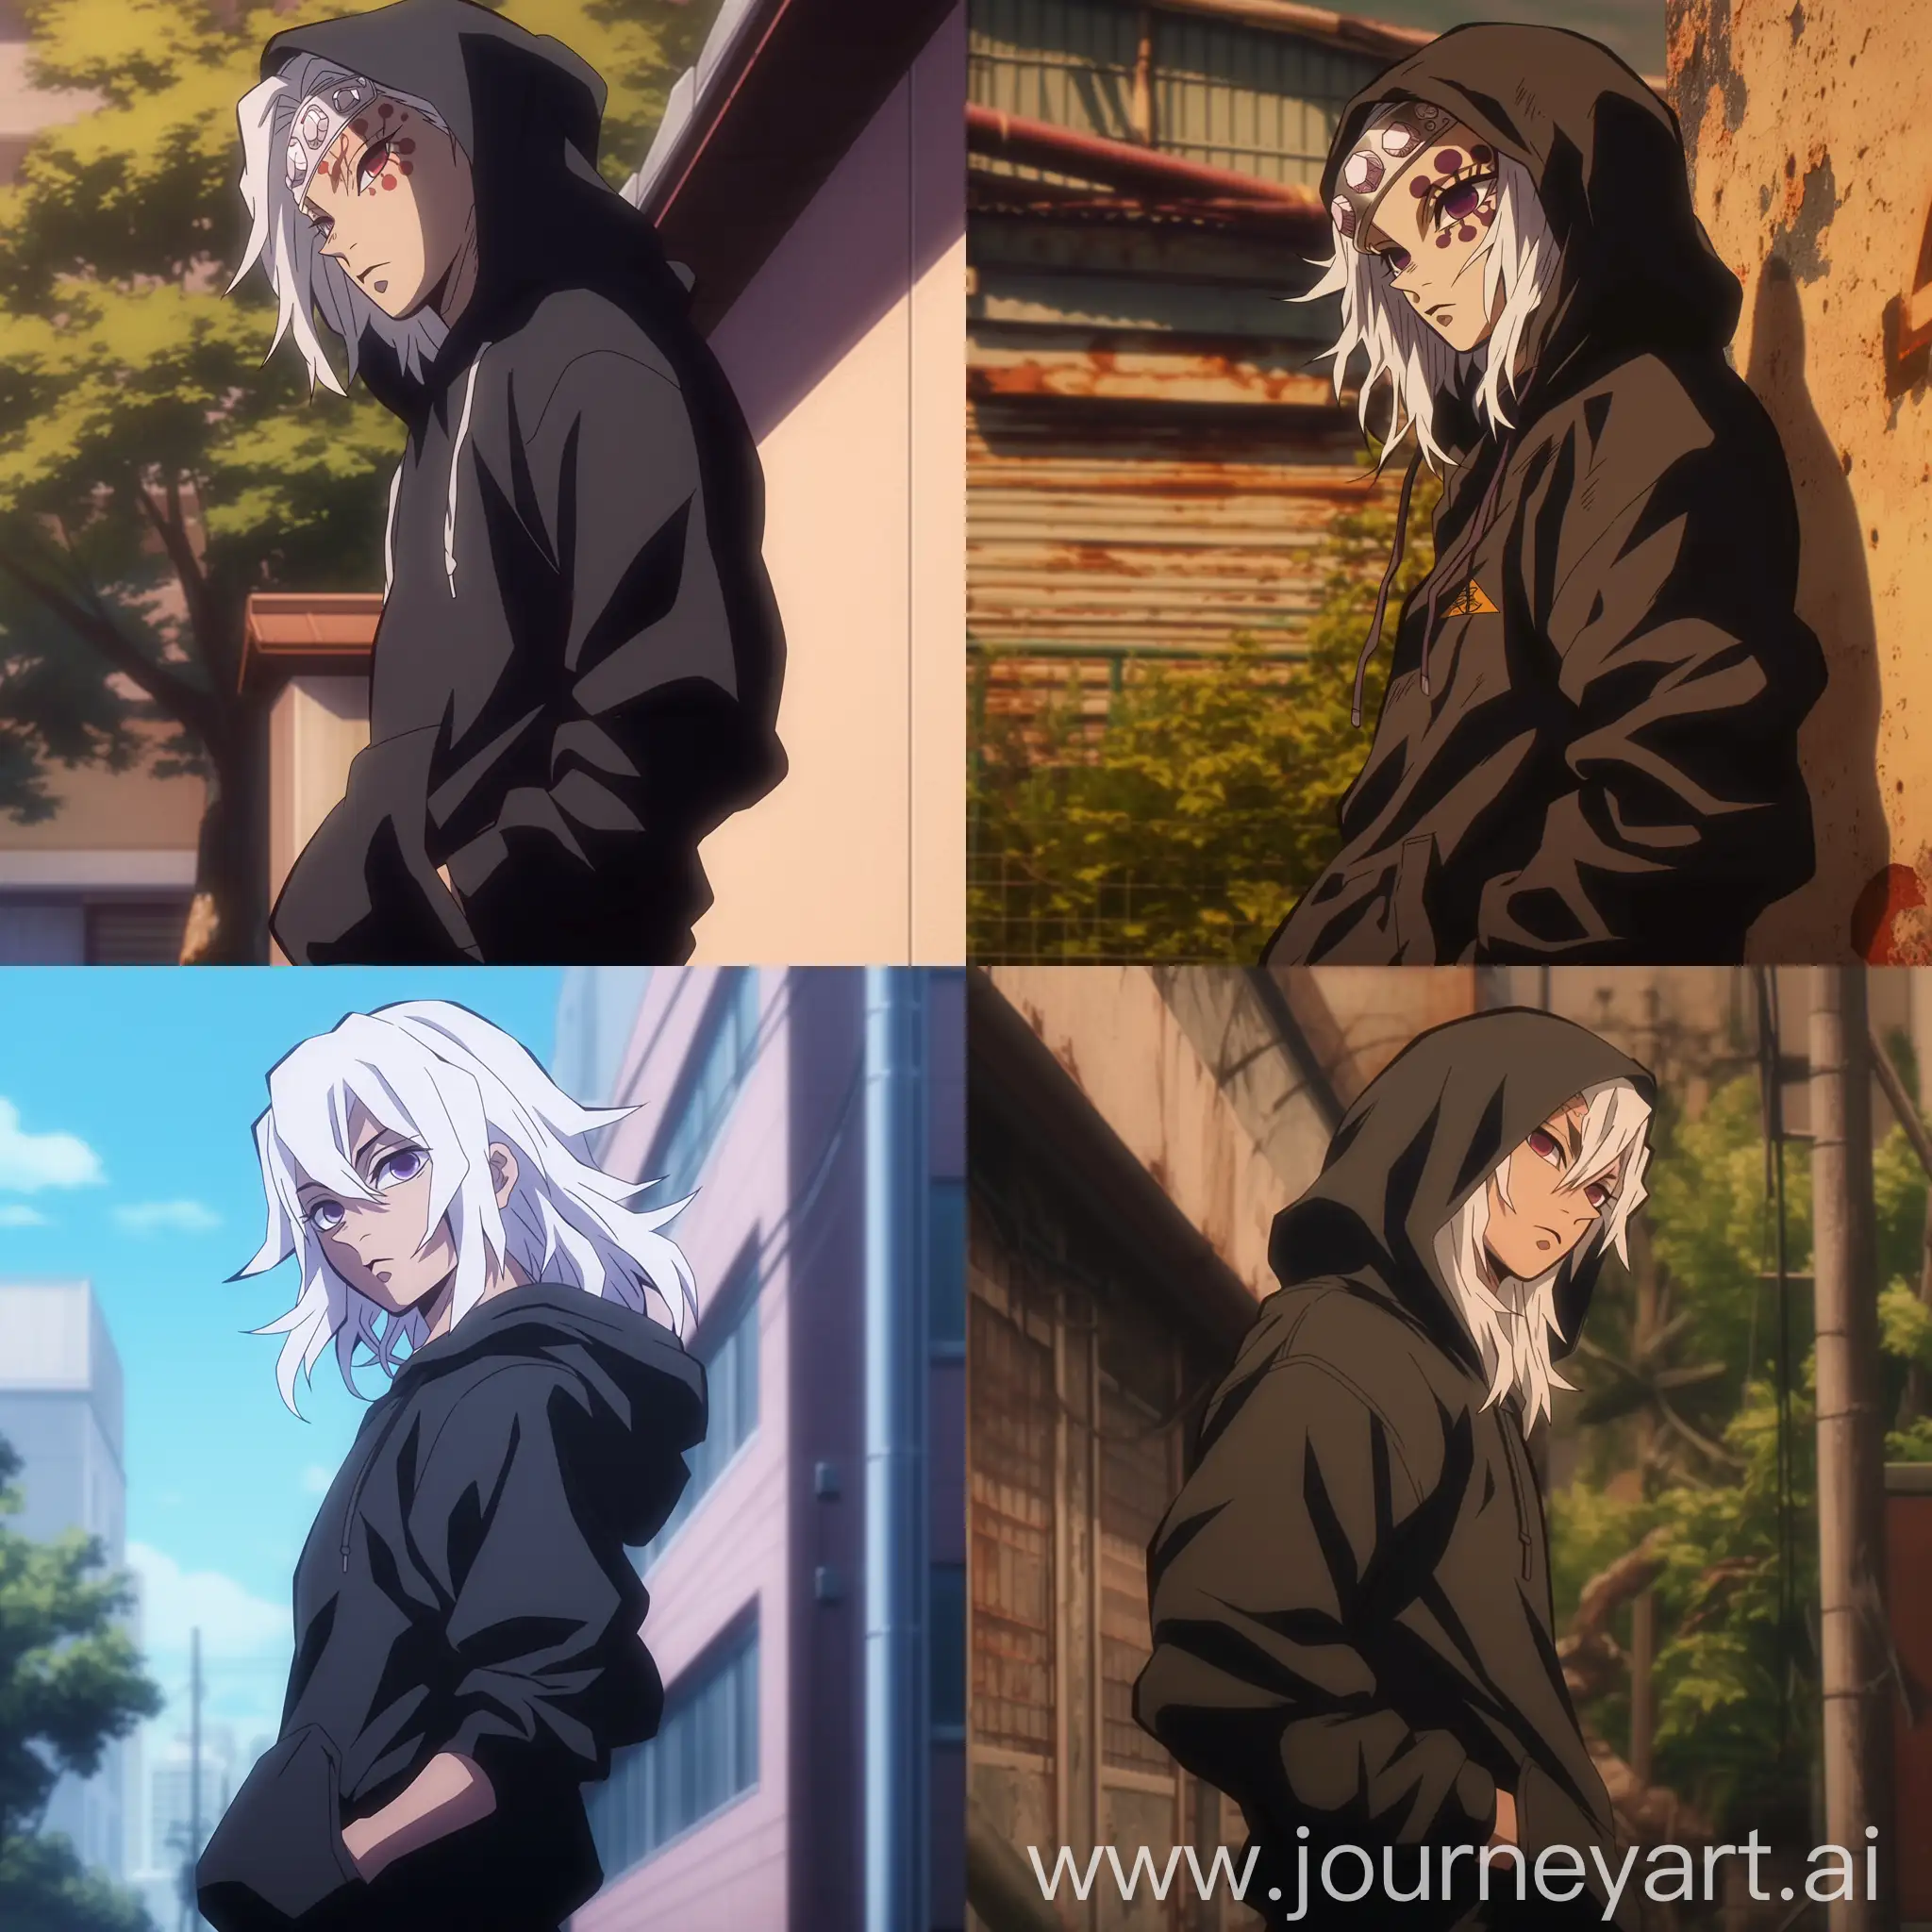 Tengen in cool hoodie, photo screenshot from anime, ((Tengen uzui)), White hair, tengen from demon slayer anime, doubtful face, looking at the viewer from side, cool look, wearing black hoodie, hands in pocket, half body shot, outdoors --niji 6